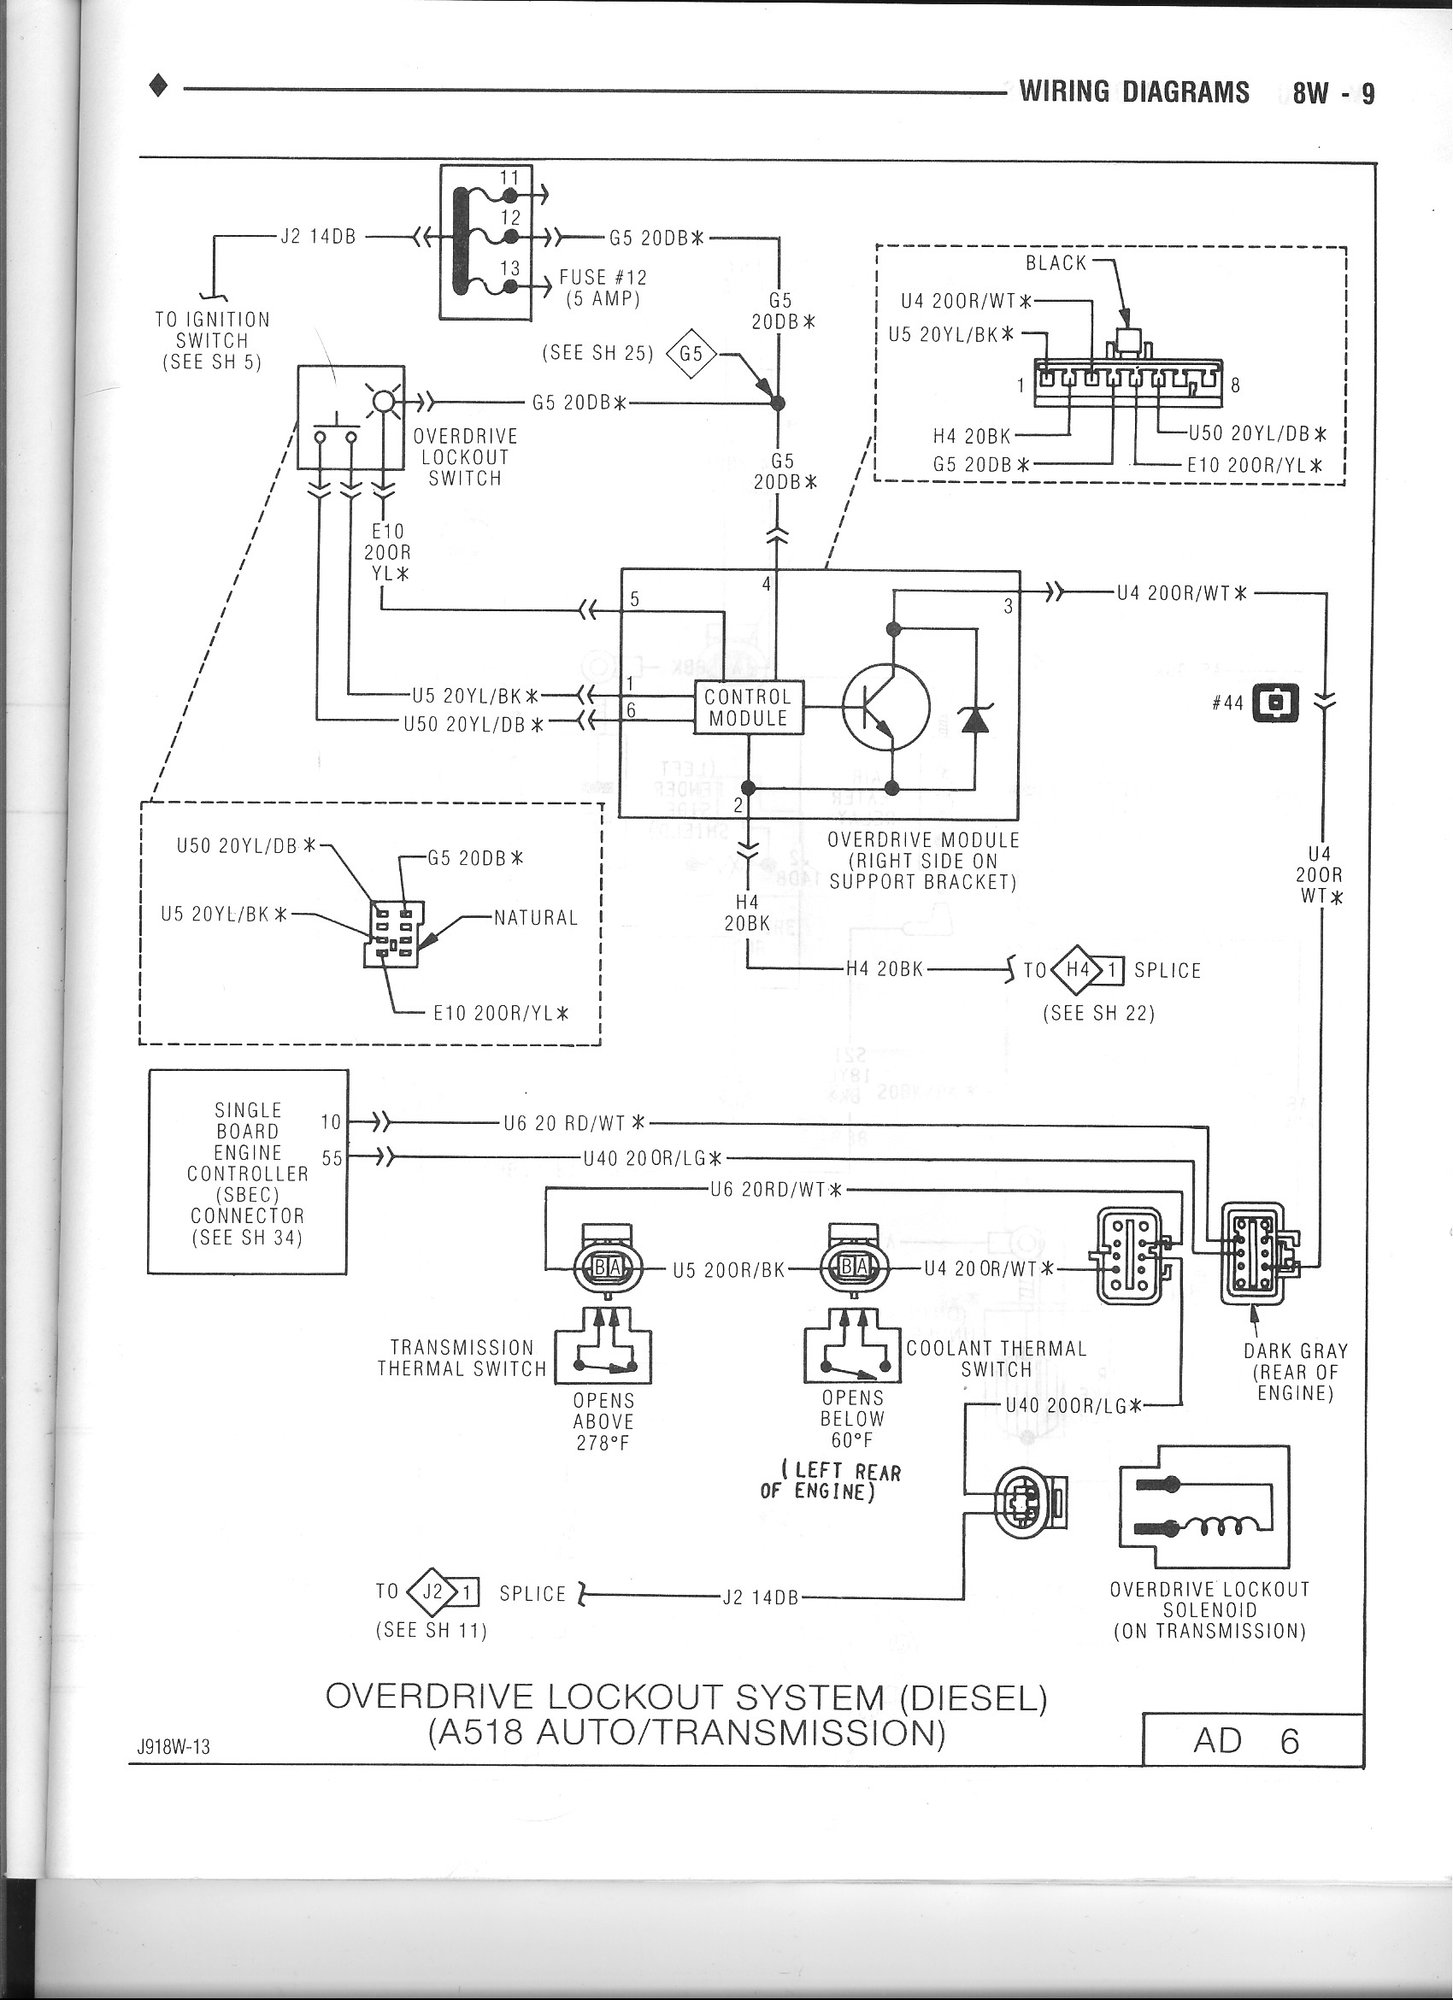 wiring mysteries - Page 2 - Dodge Diesel - Diesel Truck Resource Forums